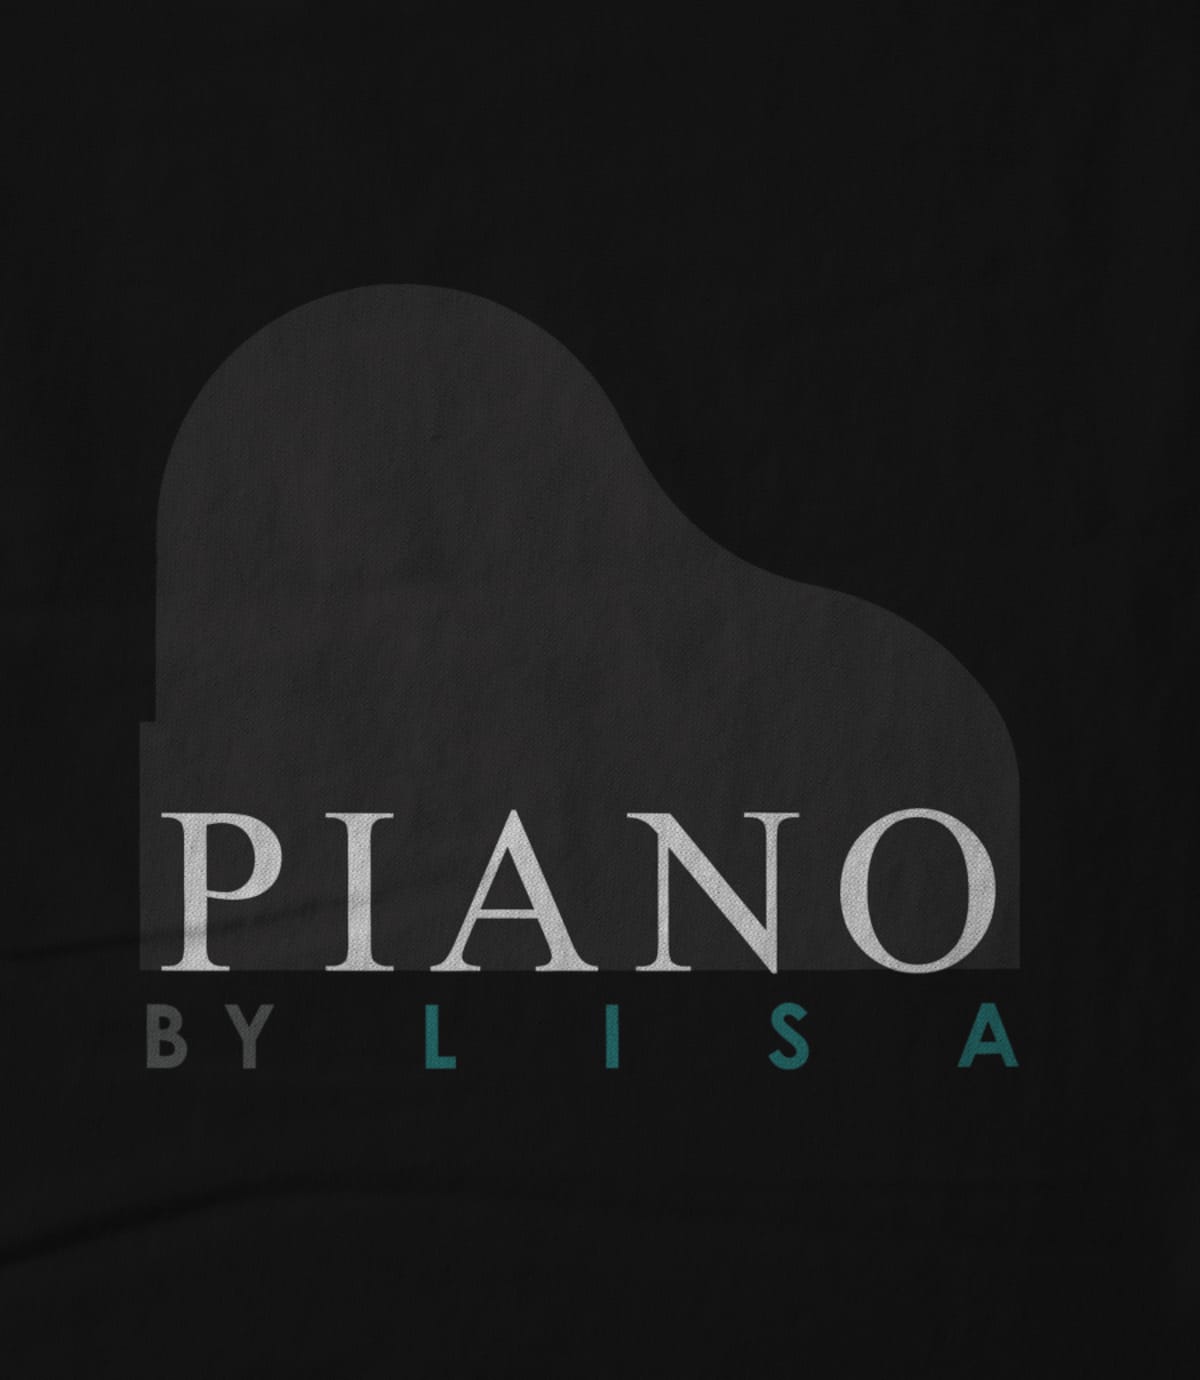 Piano by Lisa